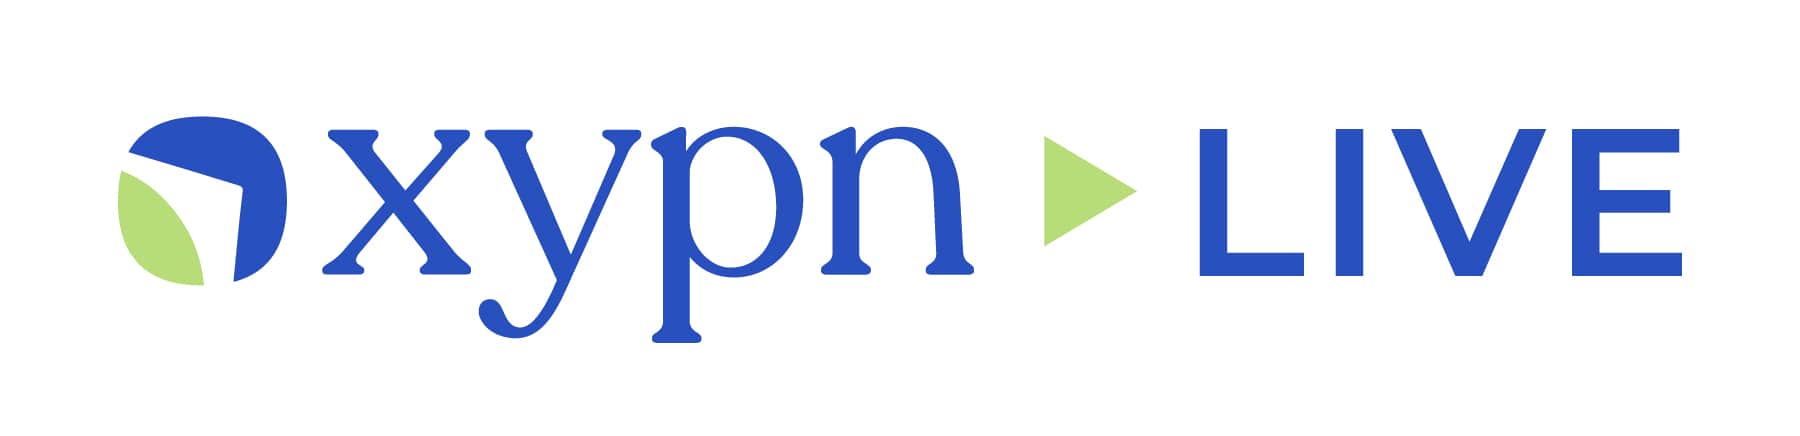 XYPN Live new logo